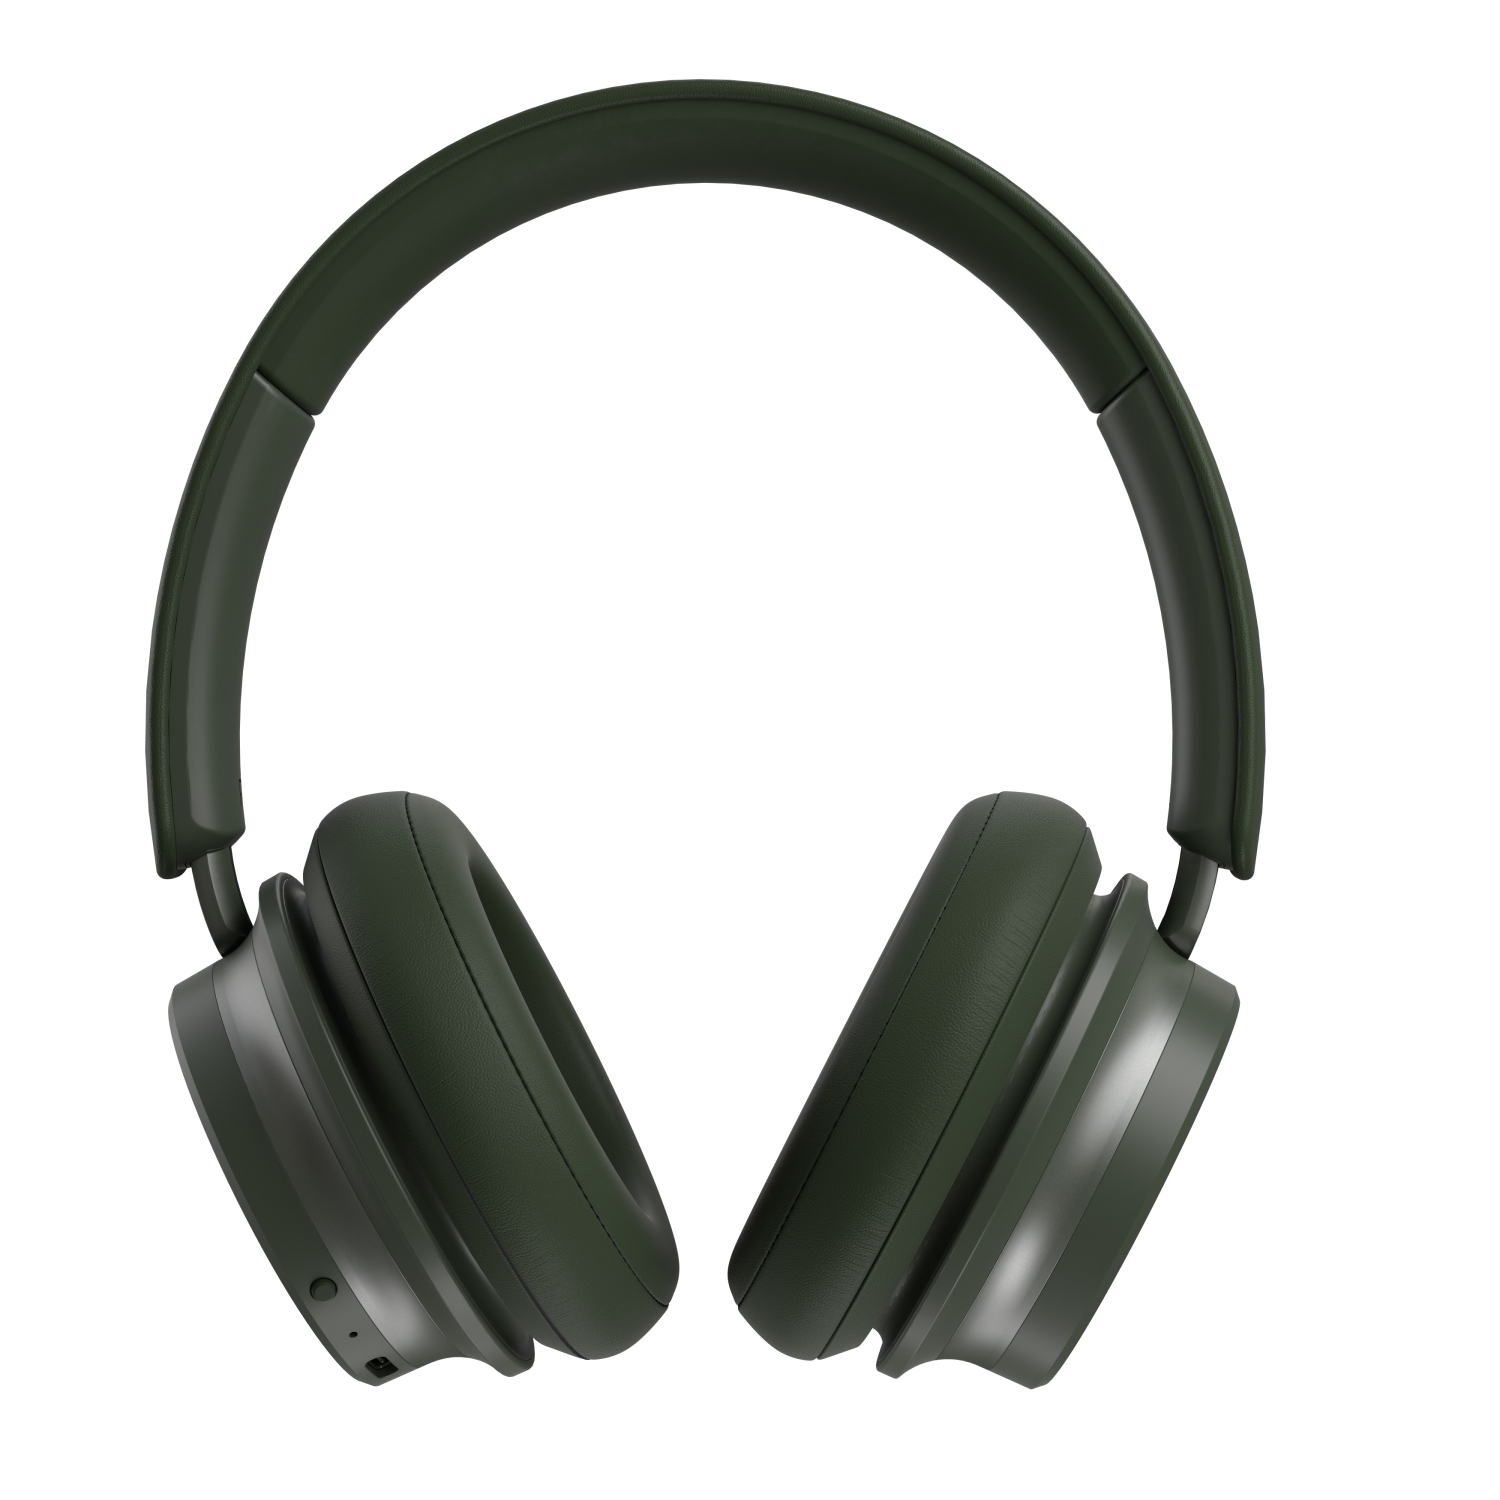 DALI IO-4 Premium Wireless Over-The-Ear Headphone - Army Green